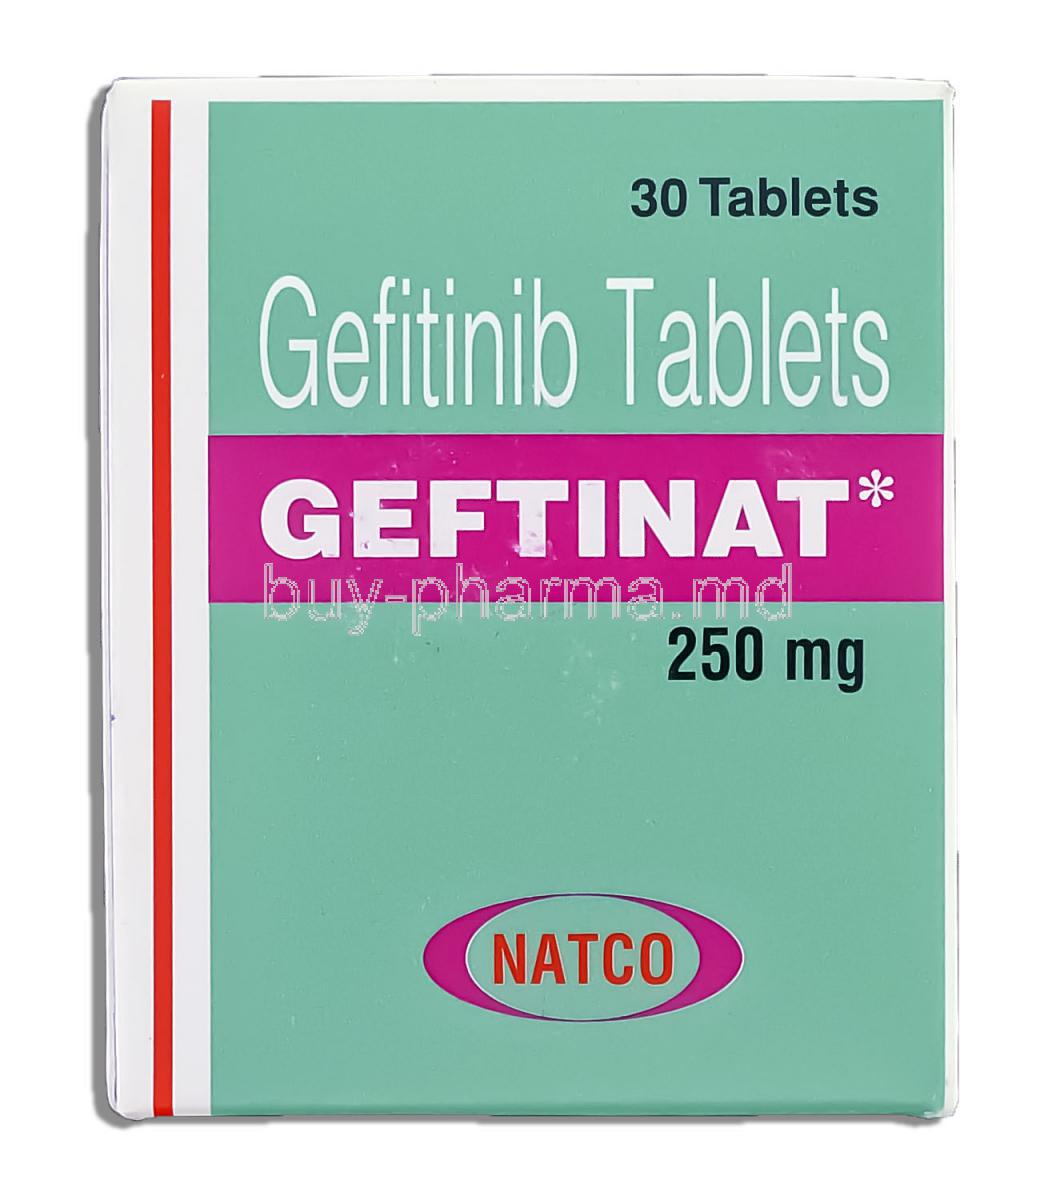 Geftinat, Generic Iressa, Gefitinib 250 mg